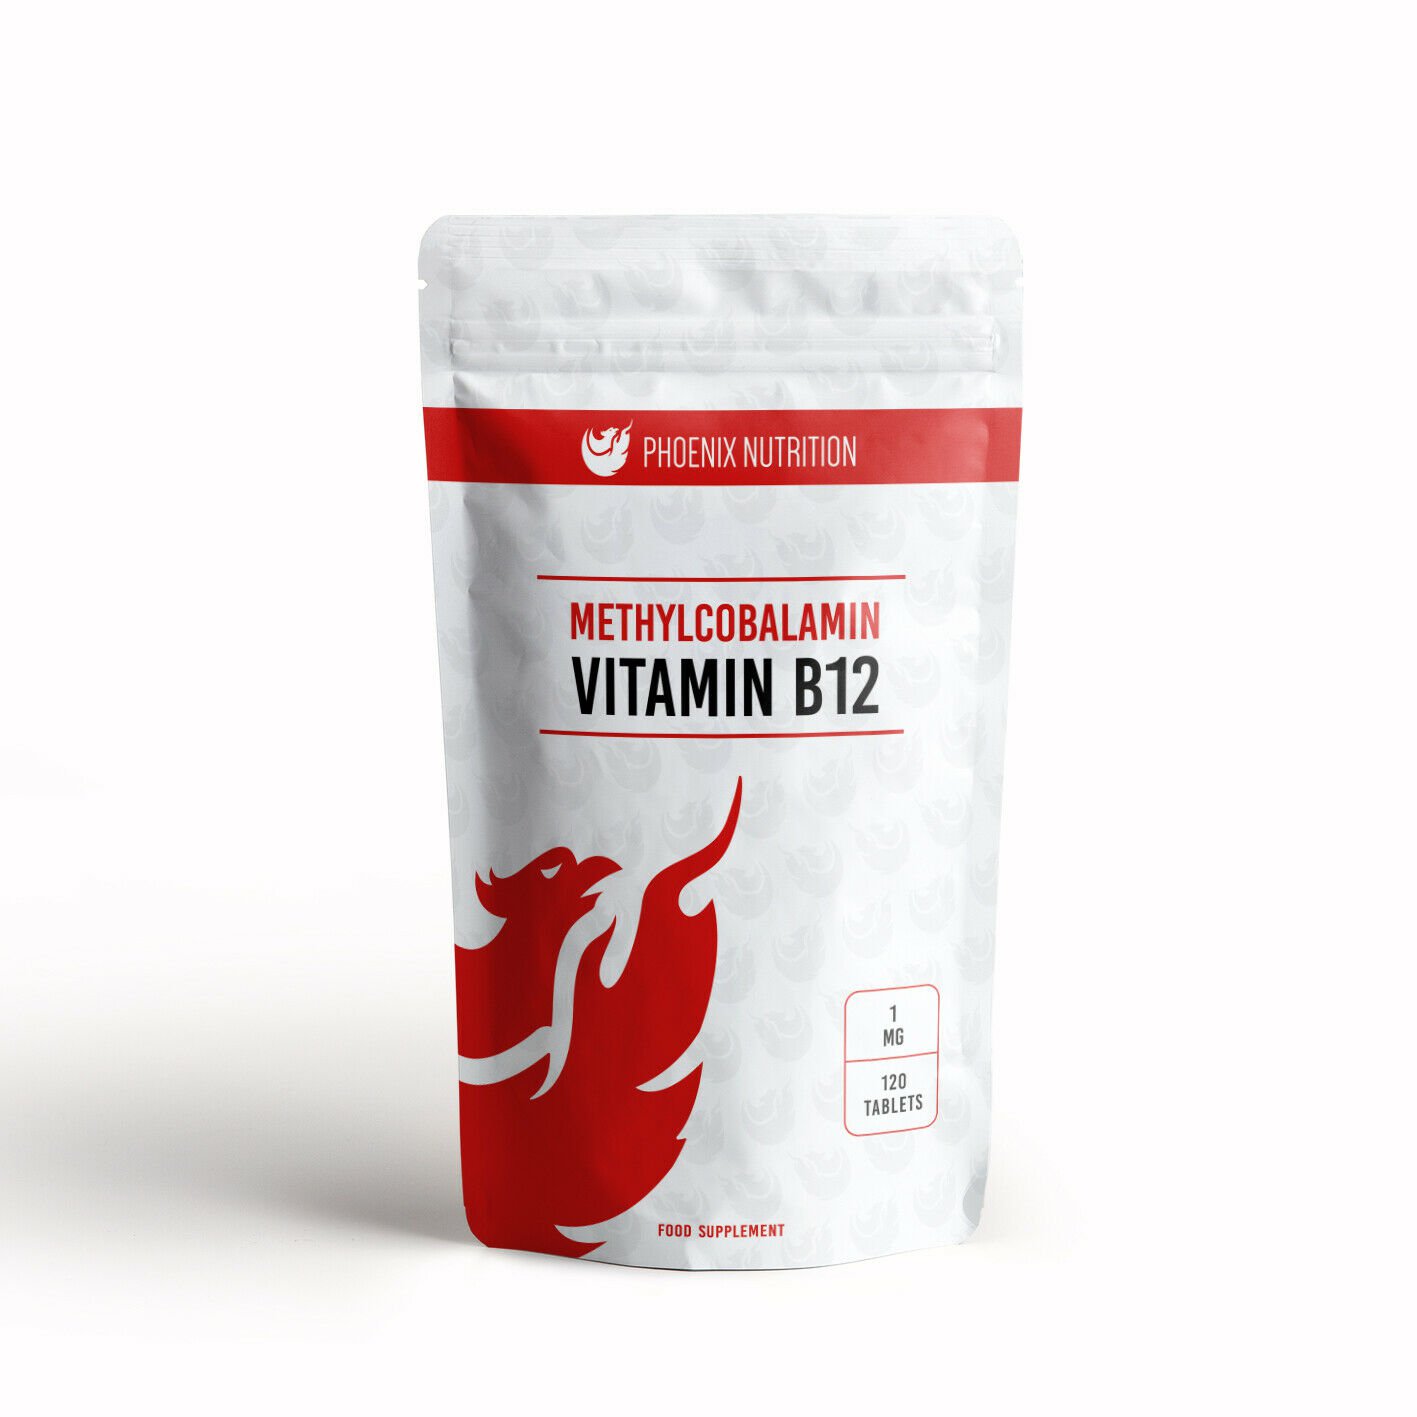 Methylcobalamin Vitamin B12 1,000mcg x 120 Tablets 1mg